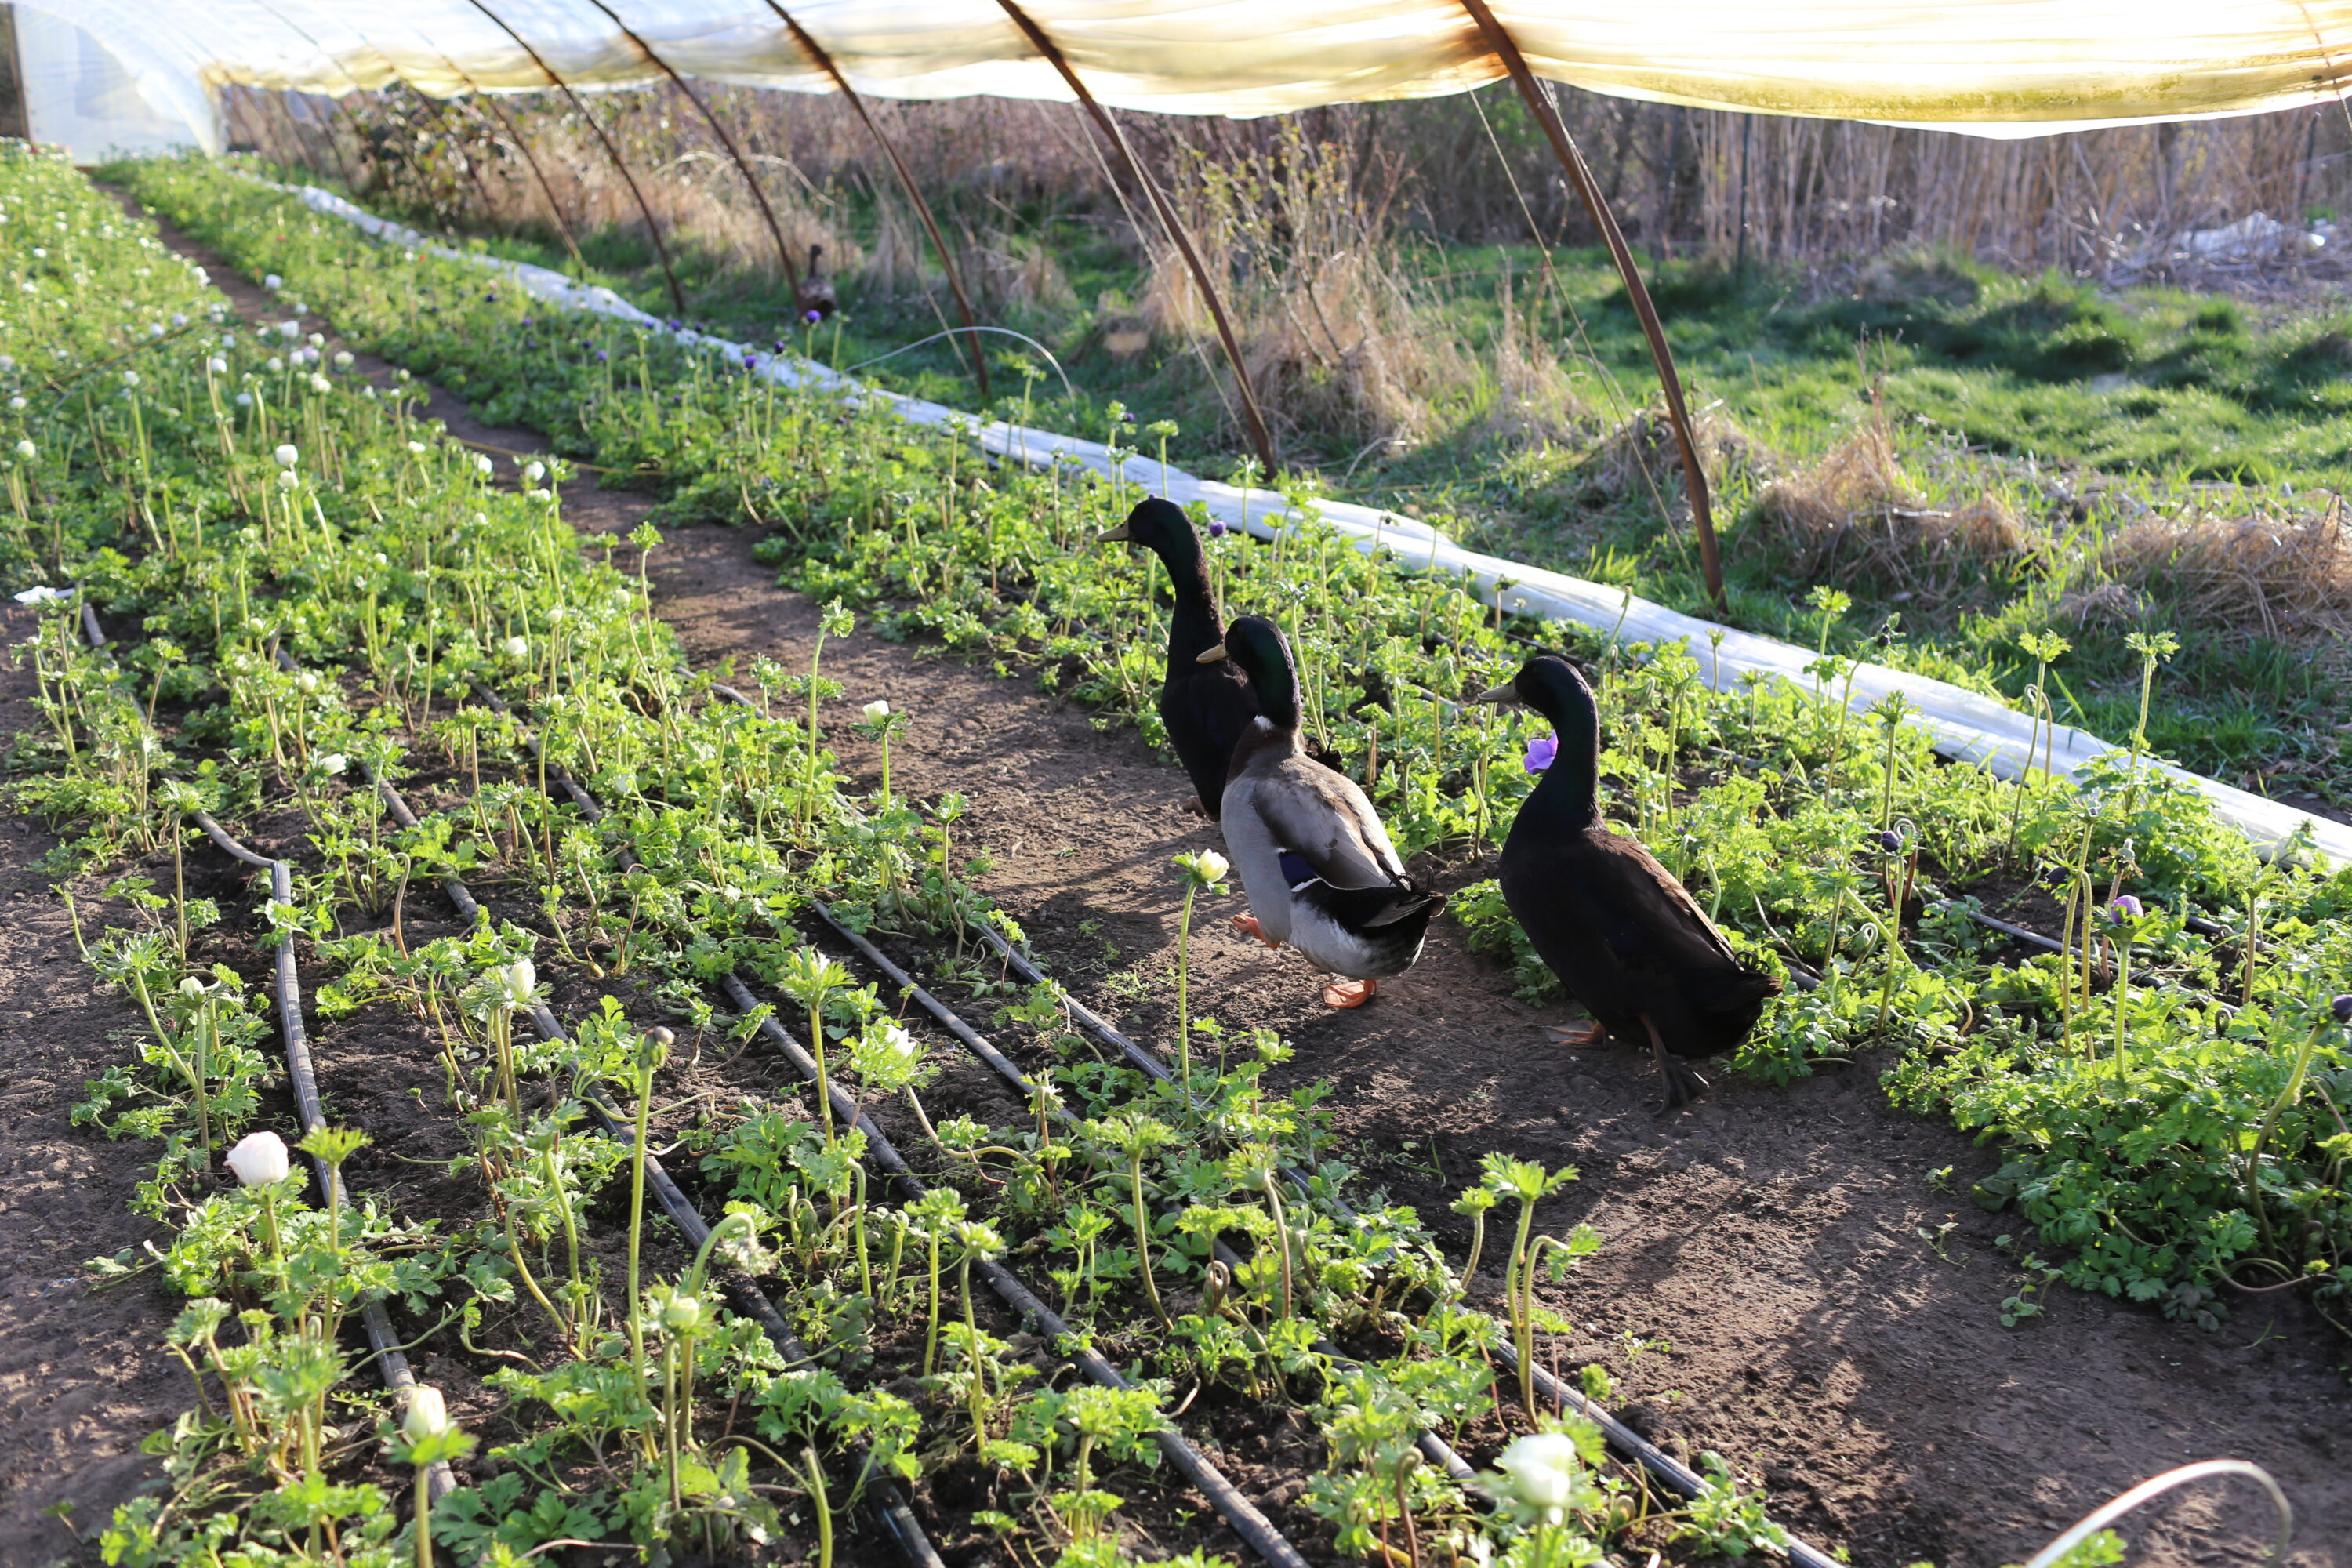 Ducks in a greenhouse